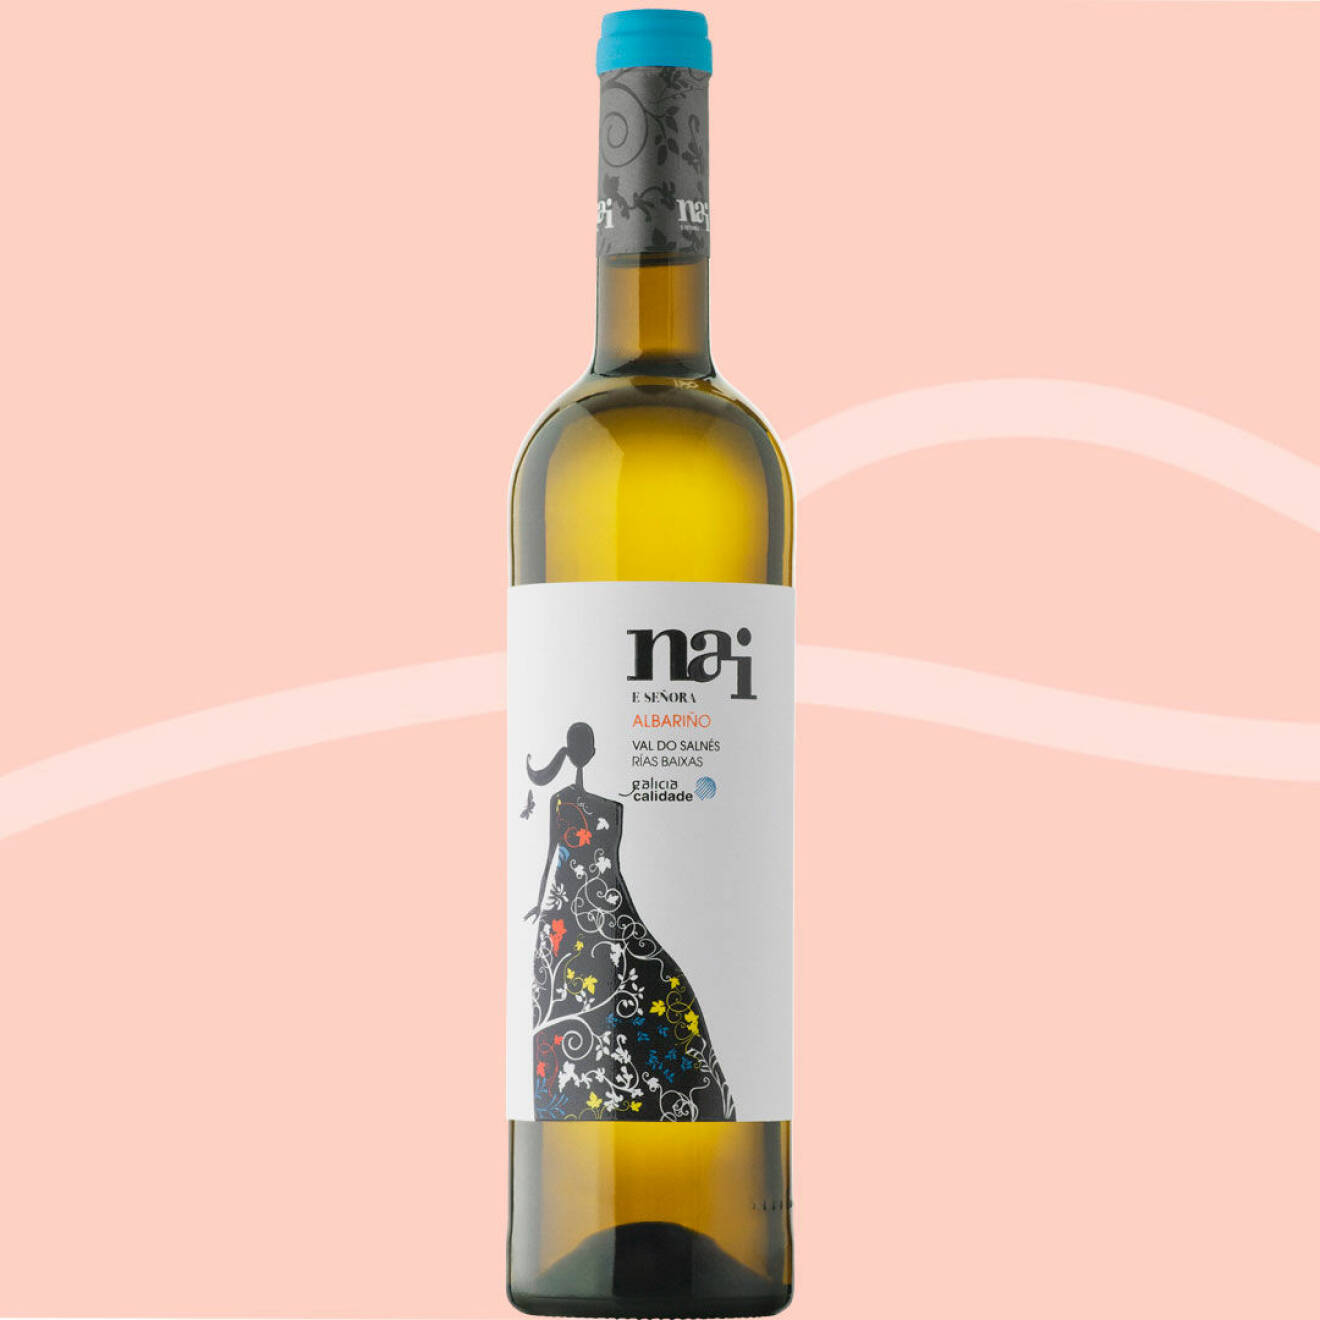 Nai Albariño, spanskt vitt vin